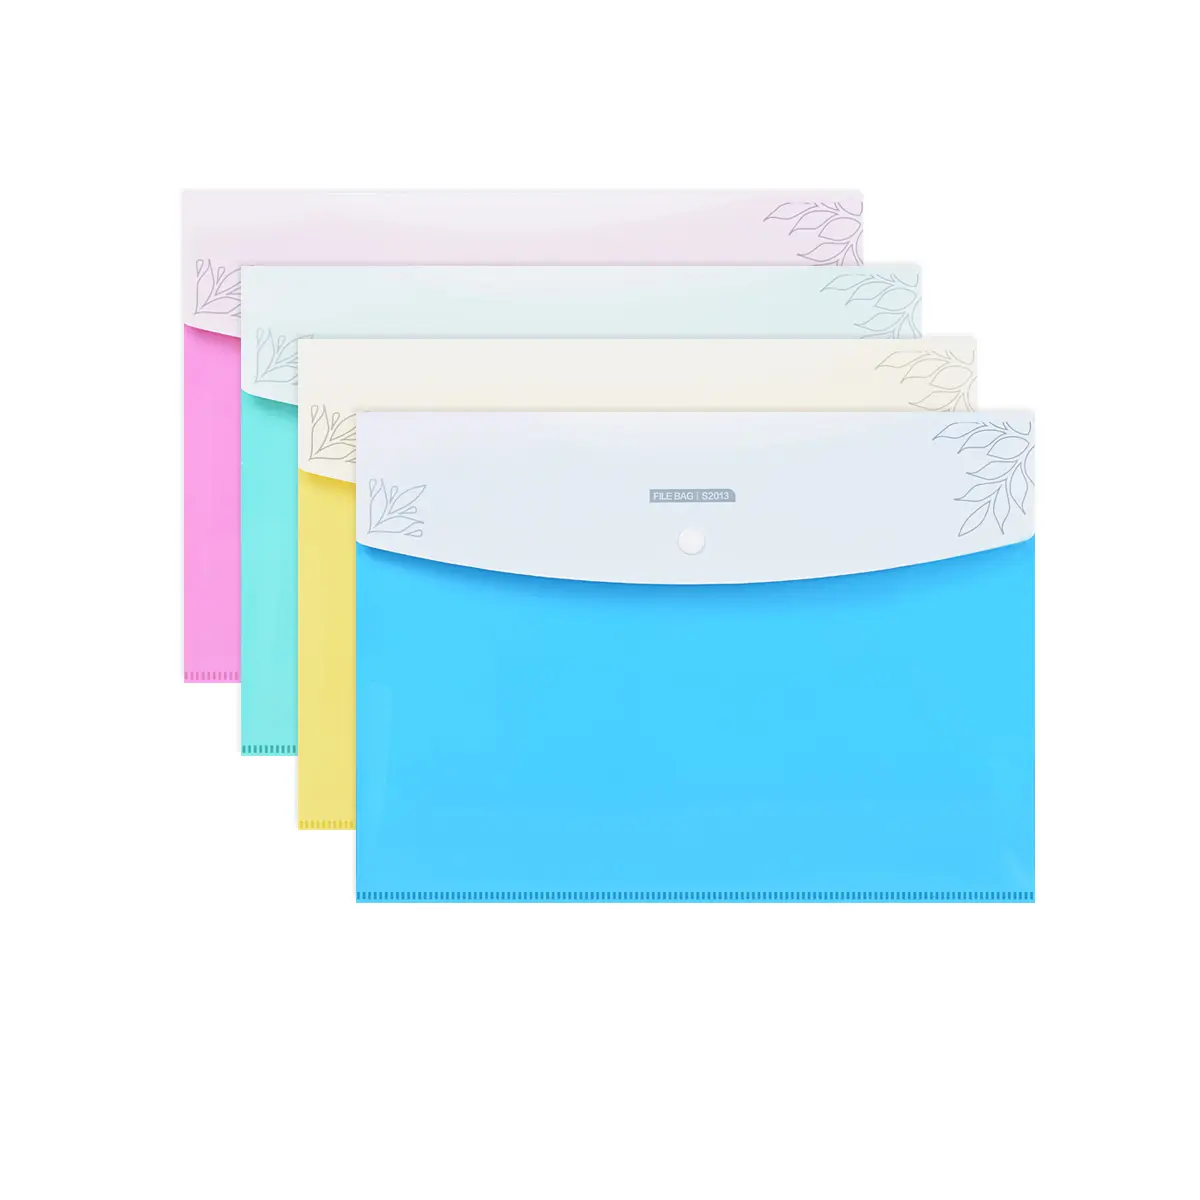 Envelopes de plástico de dupla camada, envelopes poli, saco de arquivo, pastas de documentos, pastas de arquivo